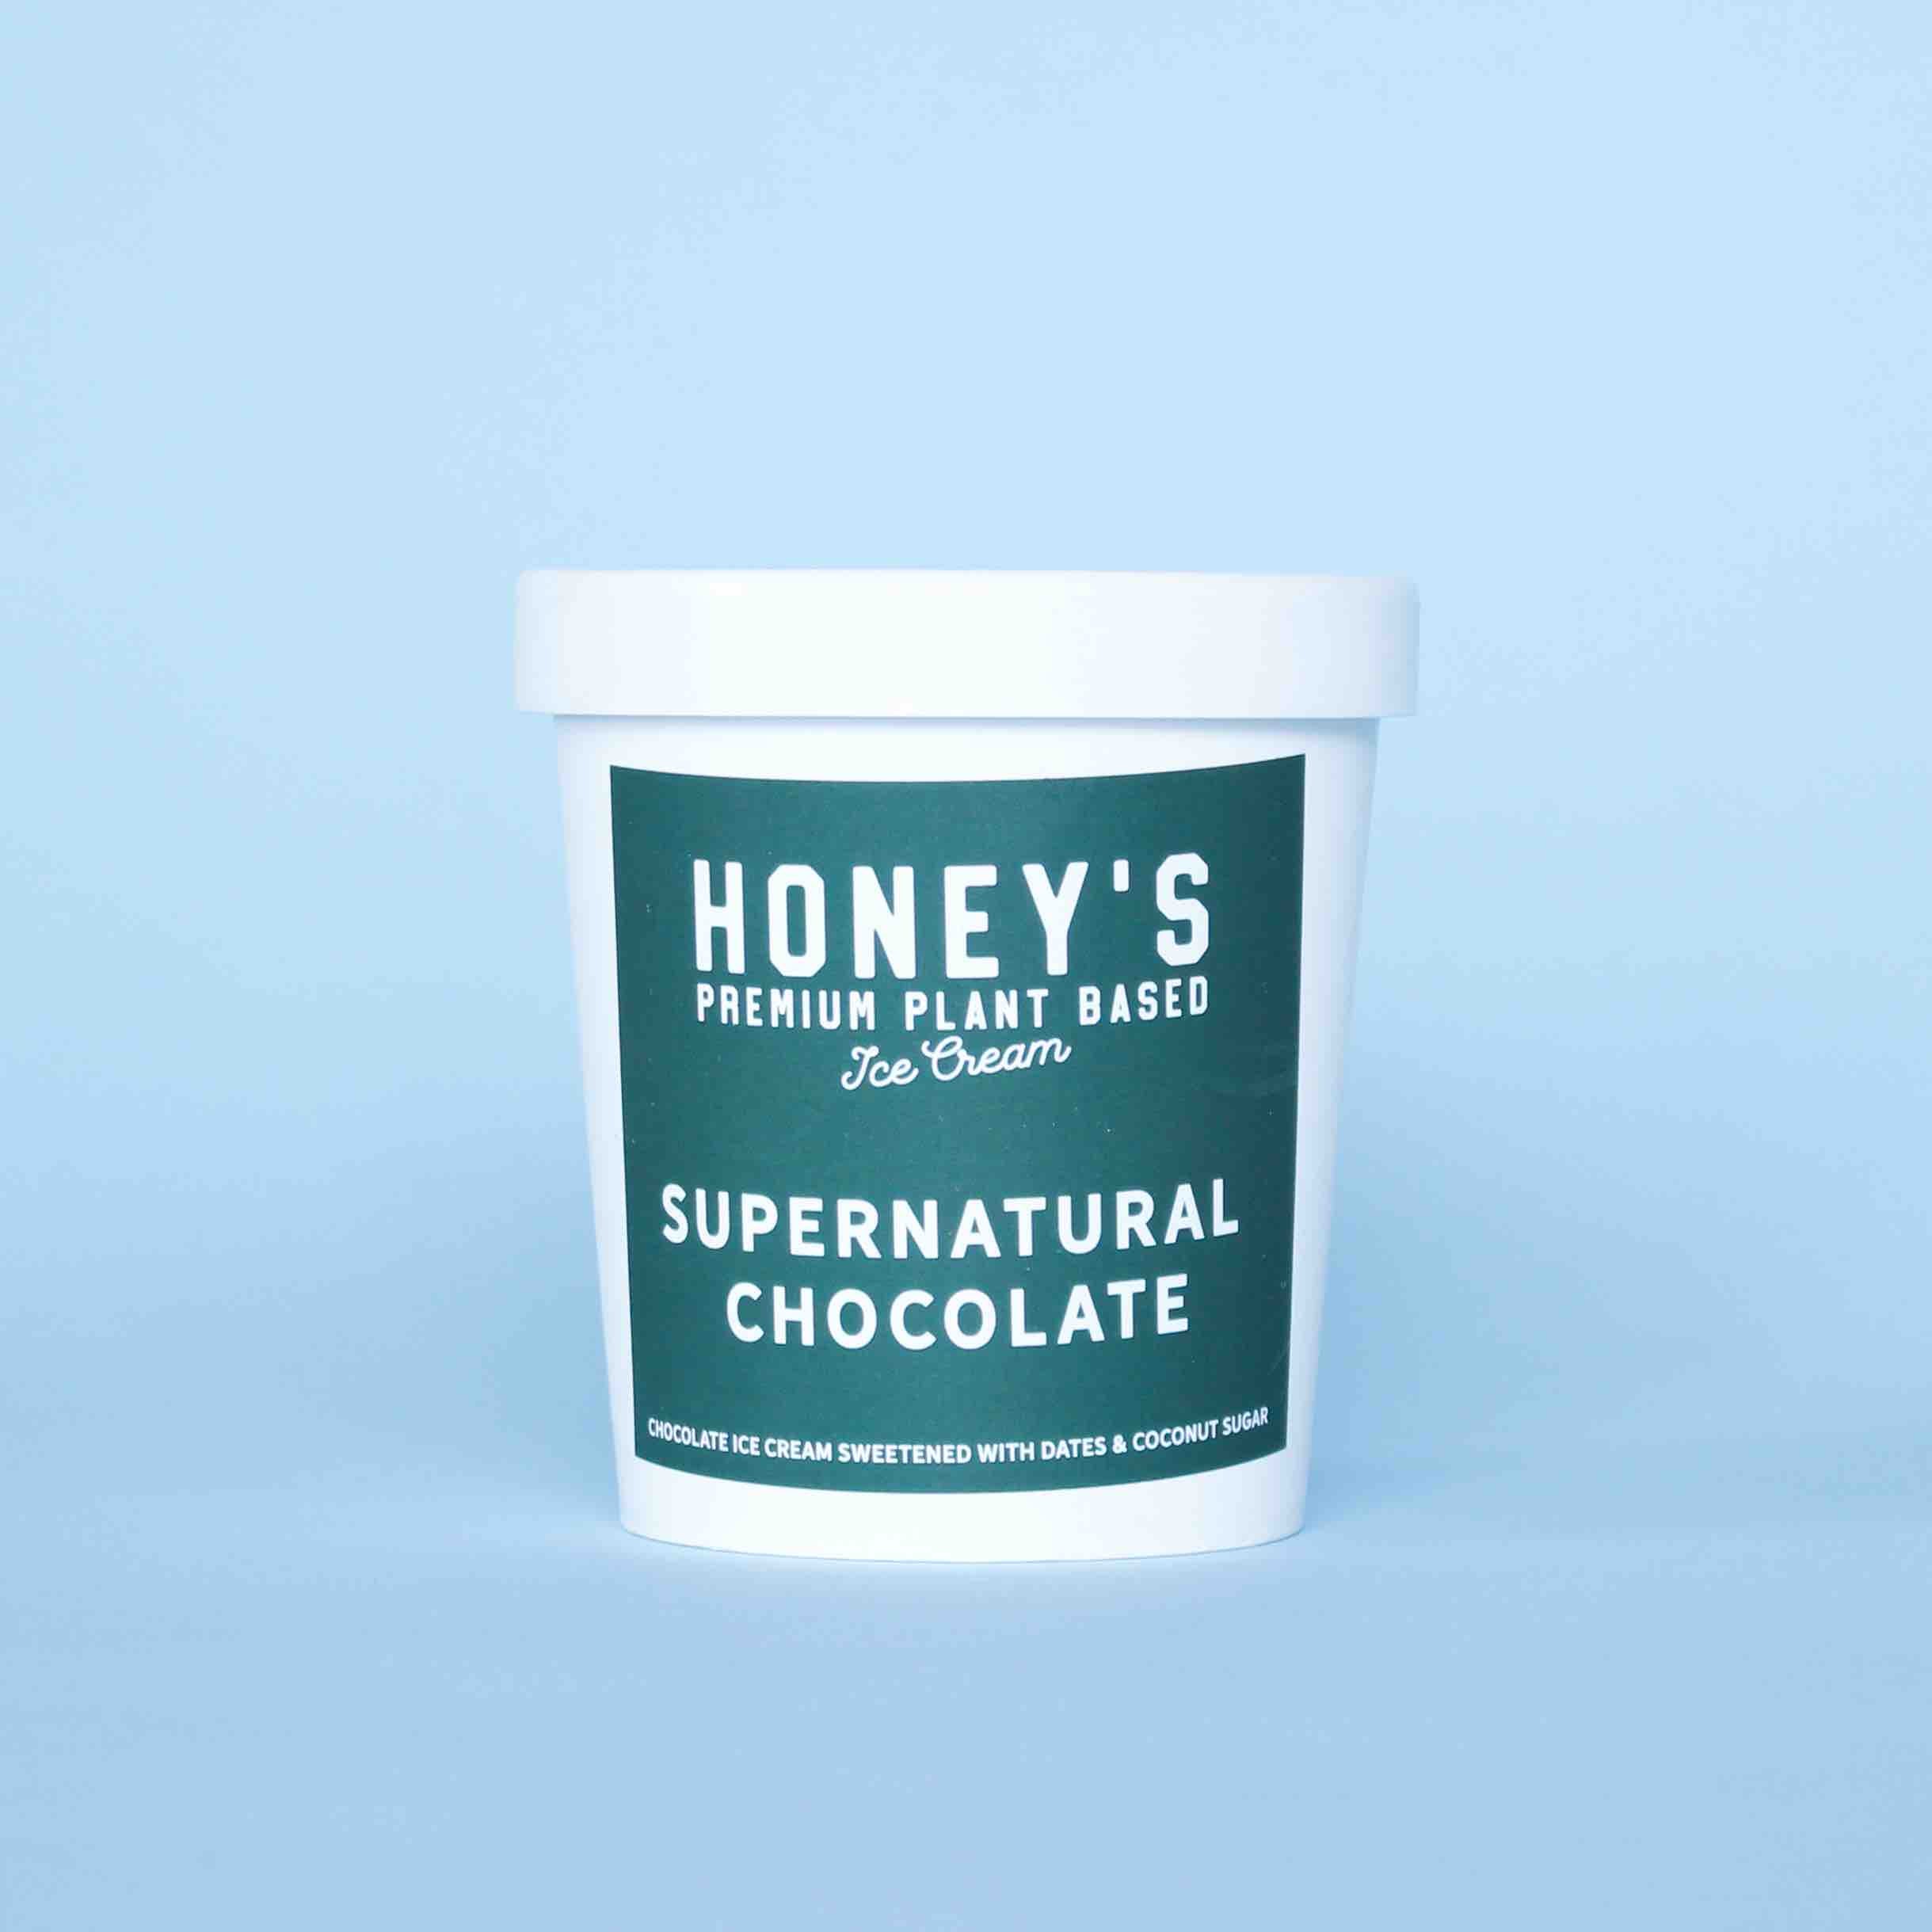 Honey’s Supernatural Ice Cream